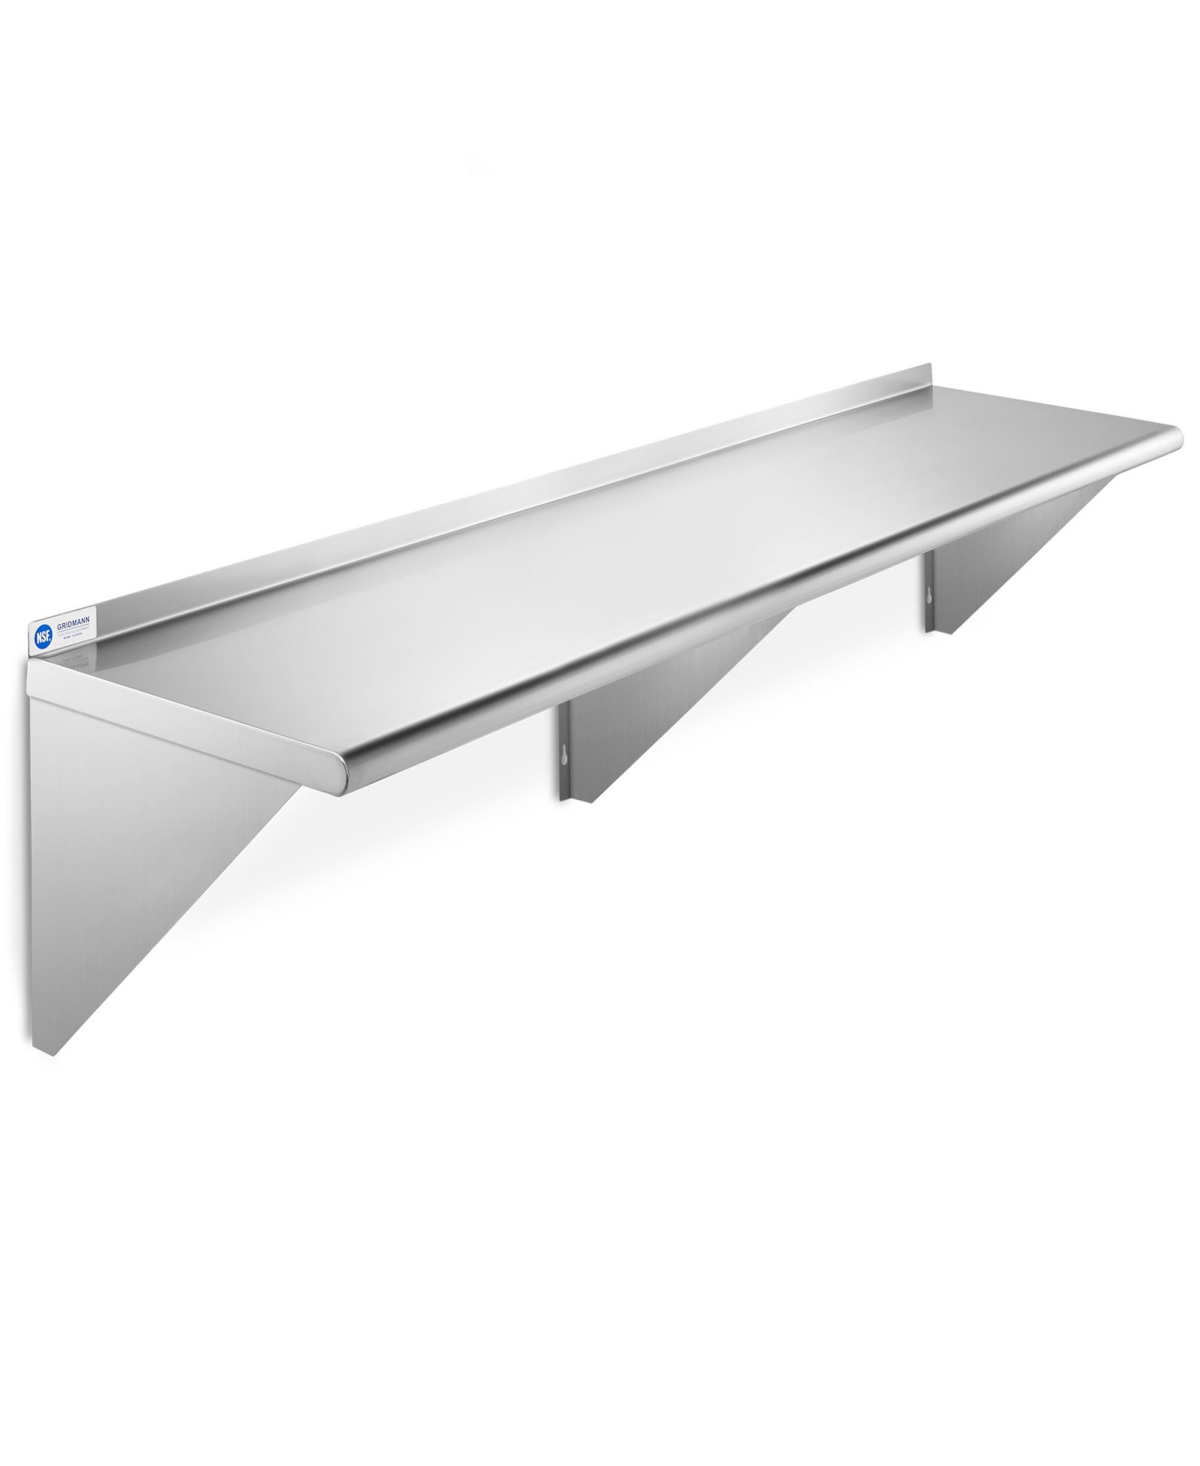 14" x 60" Nsf Stainless Steel Kitchen Wall Mount Shelf w/ Backsplash - Silver